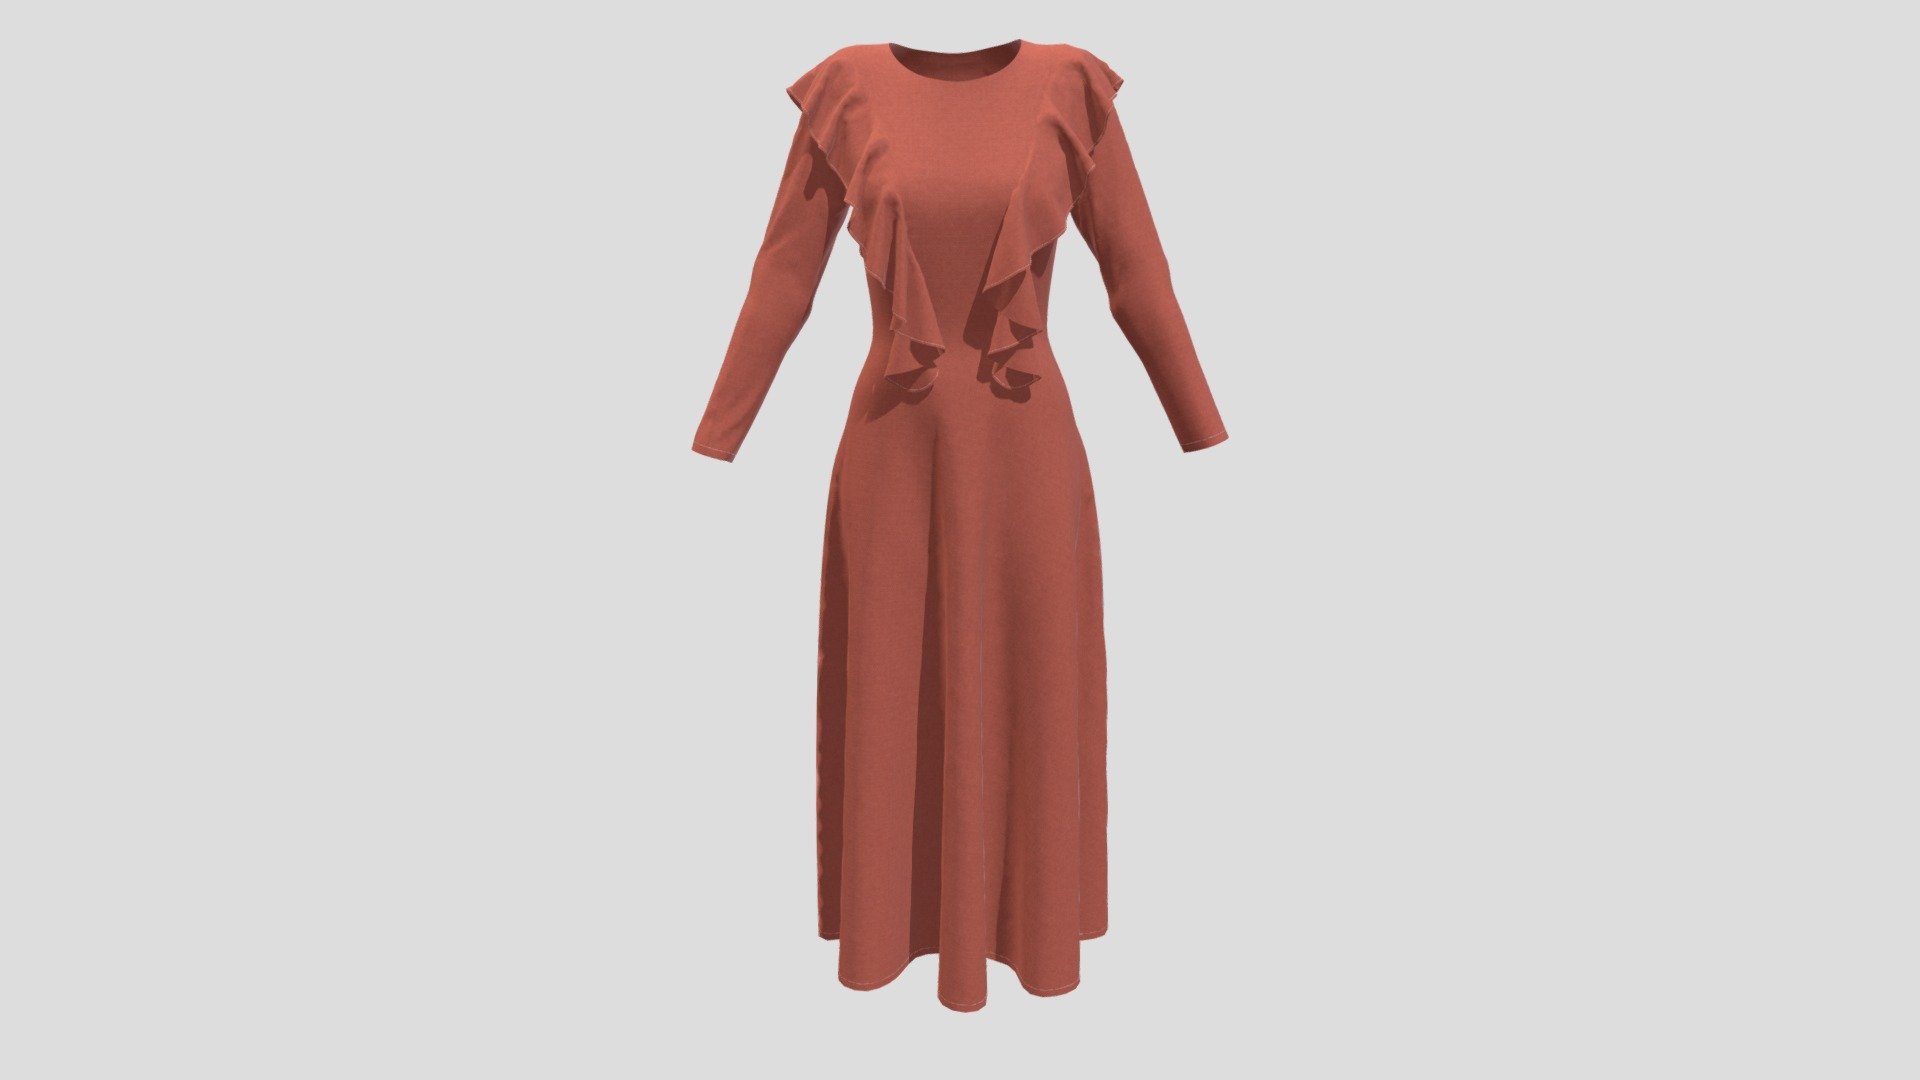 HD base mesh of a maxi long sleeve modest dress with flounce 3d model